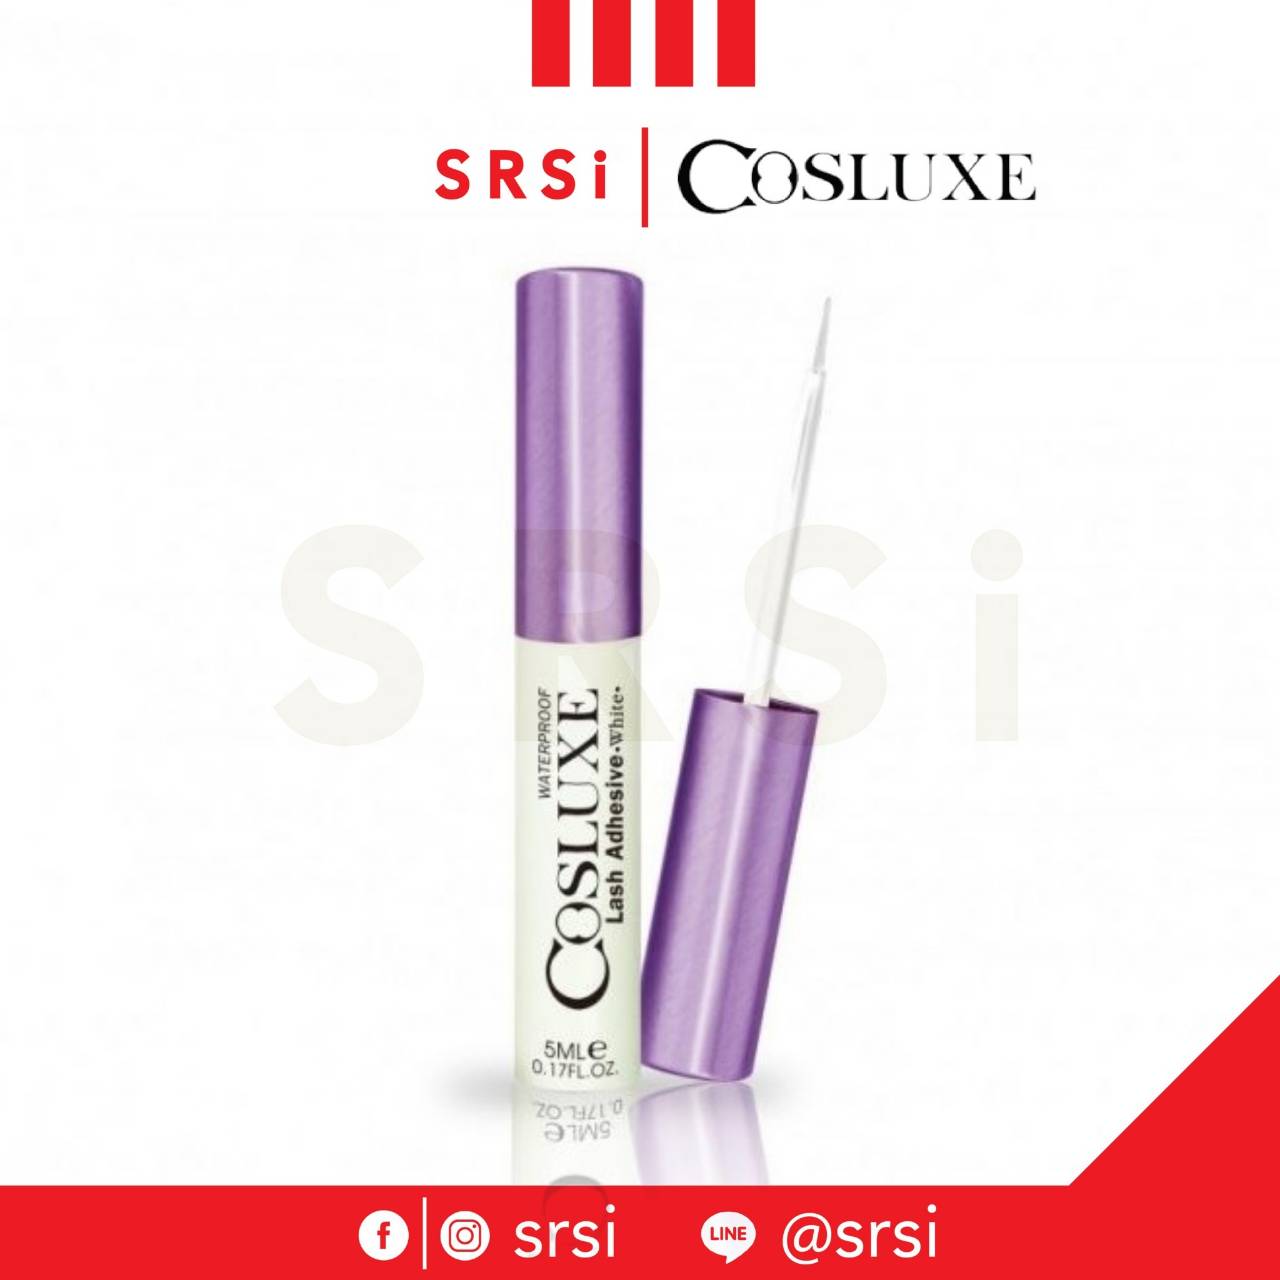 Cosluxe Lash Adhesive White Waterproof (5ml) : คอสลุค กาว กาวติดขนตาปลอม กาวติดขนตา x 1 ชิ้น       SRSi